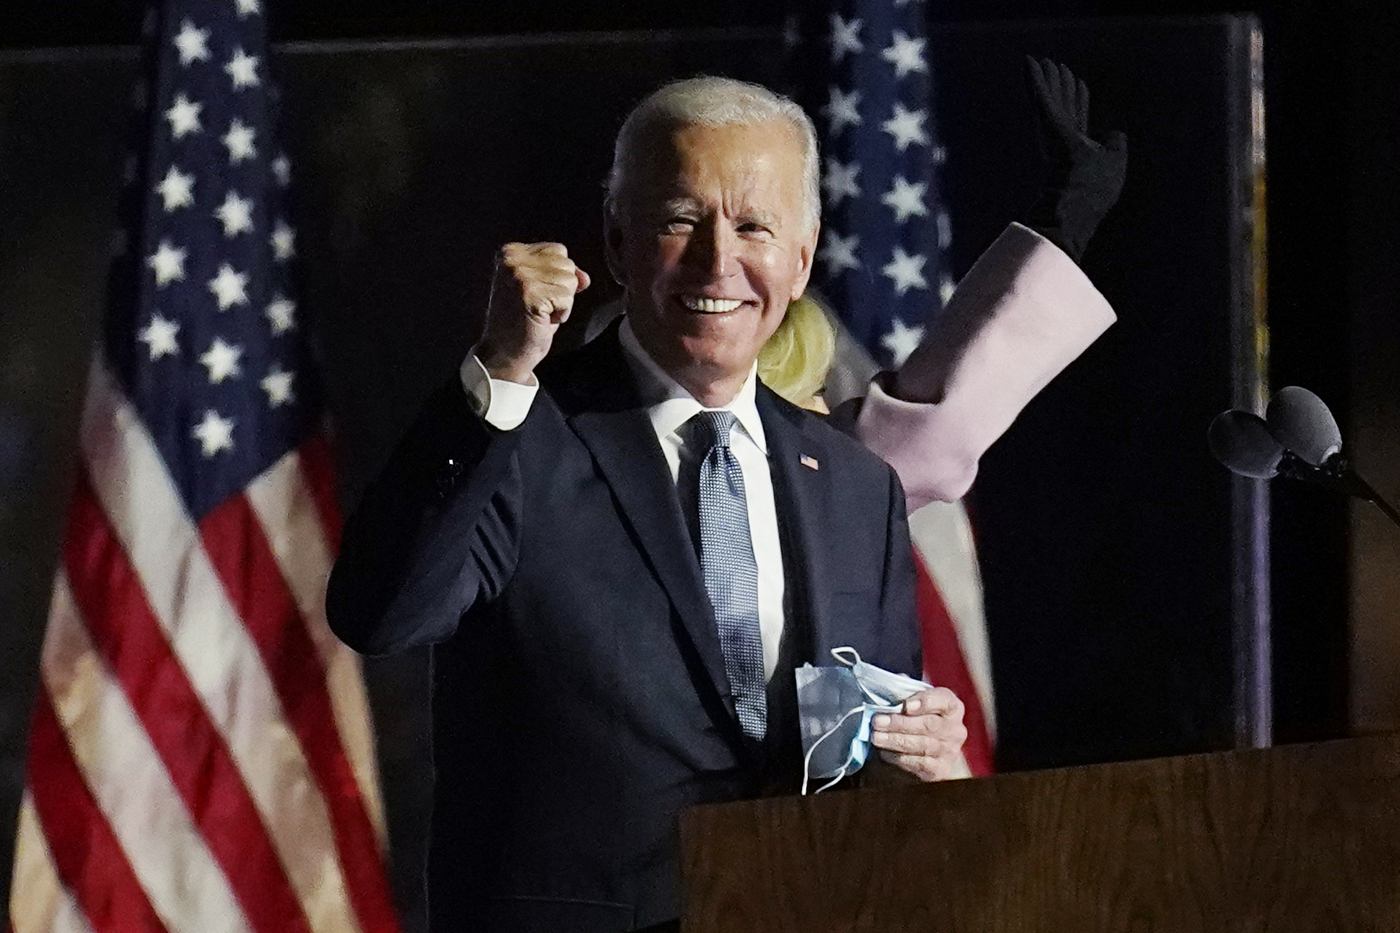 Democratic presidential candidate former Vice President Joe Biden speaks to supporters, early Wednesday, Nov. 4, 2020, in Wilmington, Del. (AP Photo/Paul Sancya)